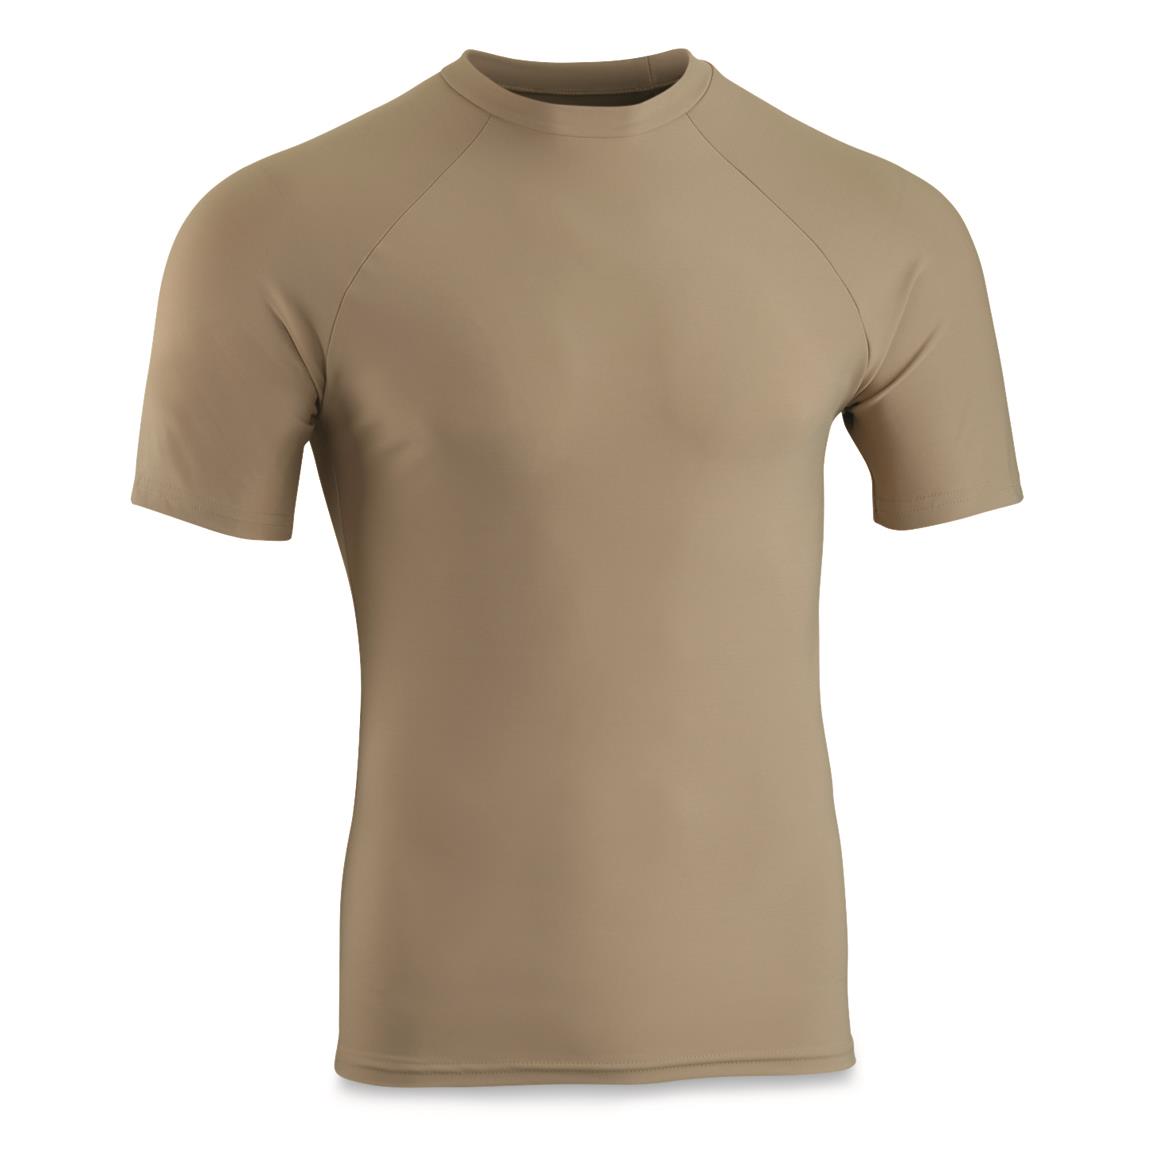 U.S. Military Surplus Compression Moisture Control Short Sleeve T-Shirt, New, Sand